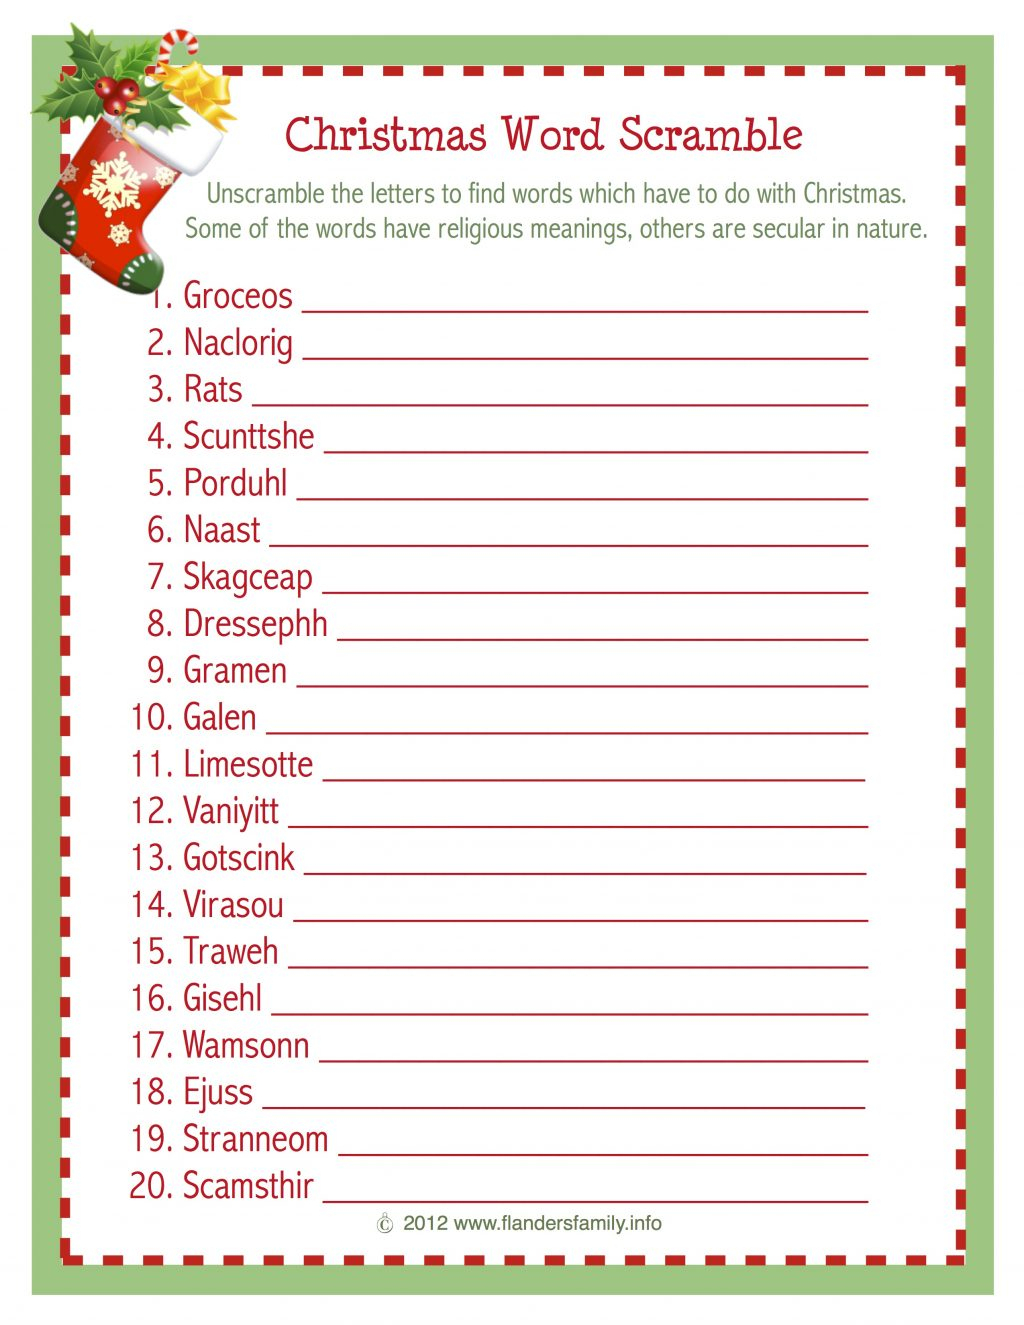 Christmas Word Scramble (Free Printable) - Flanders Family Homelife - Free Printable Word Scramble Worksheets